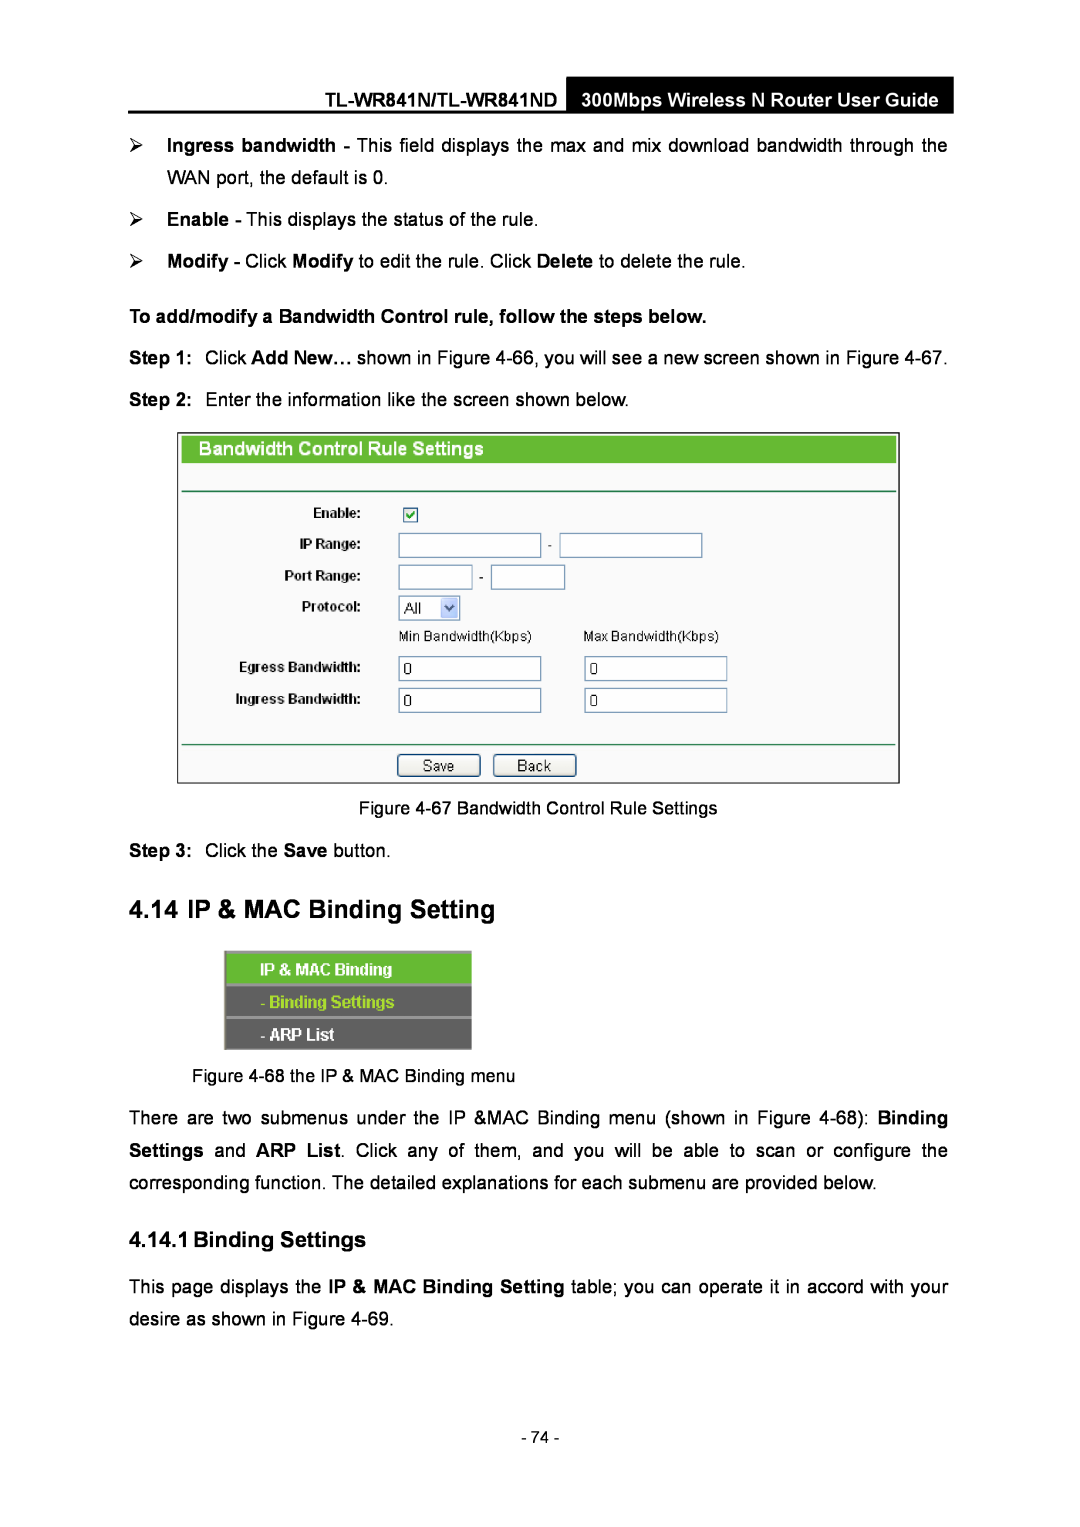 TP-Link TL-WR841N manual 4.14 IP & MAC Binding Setting, Binding Settings 